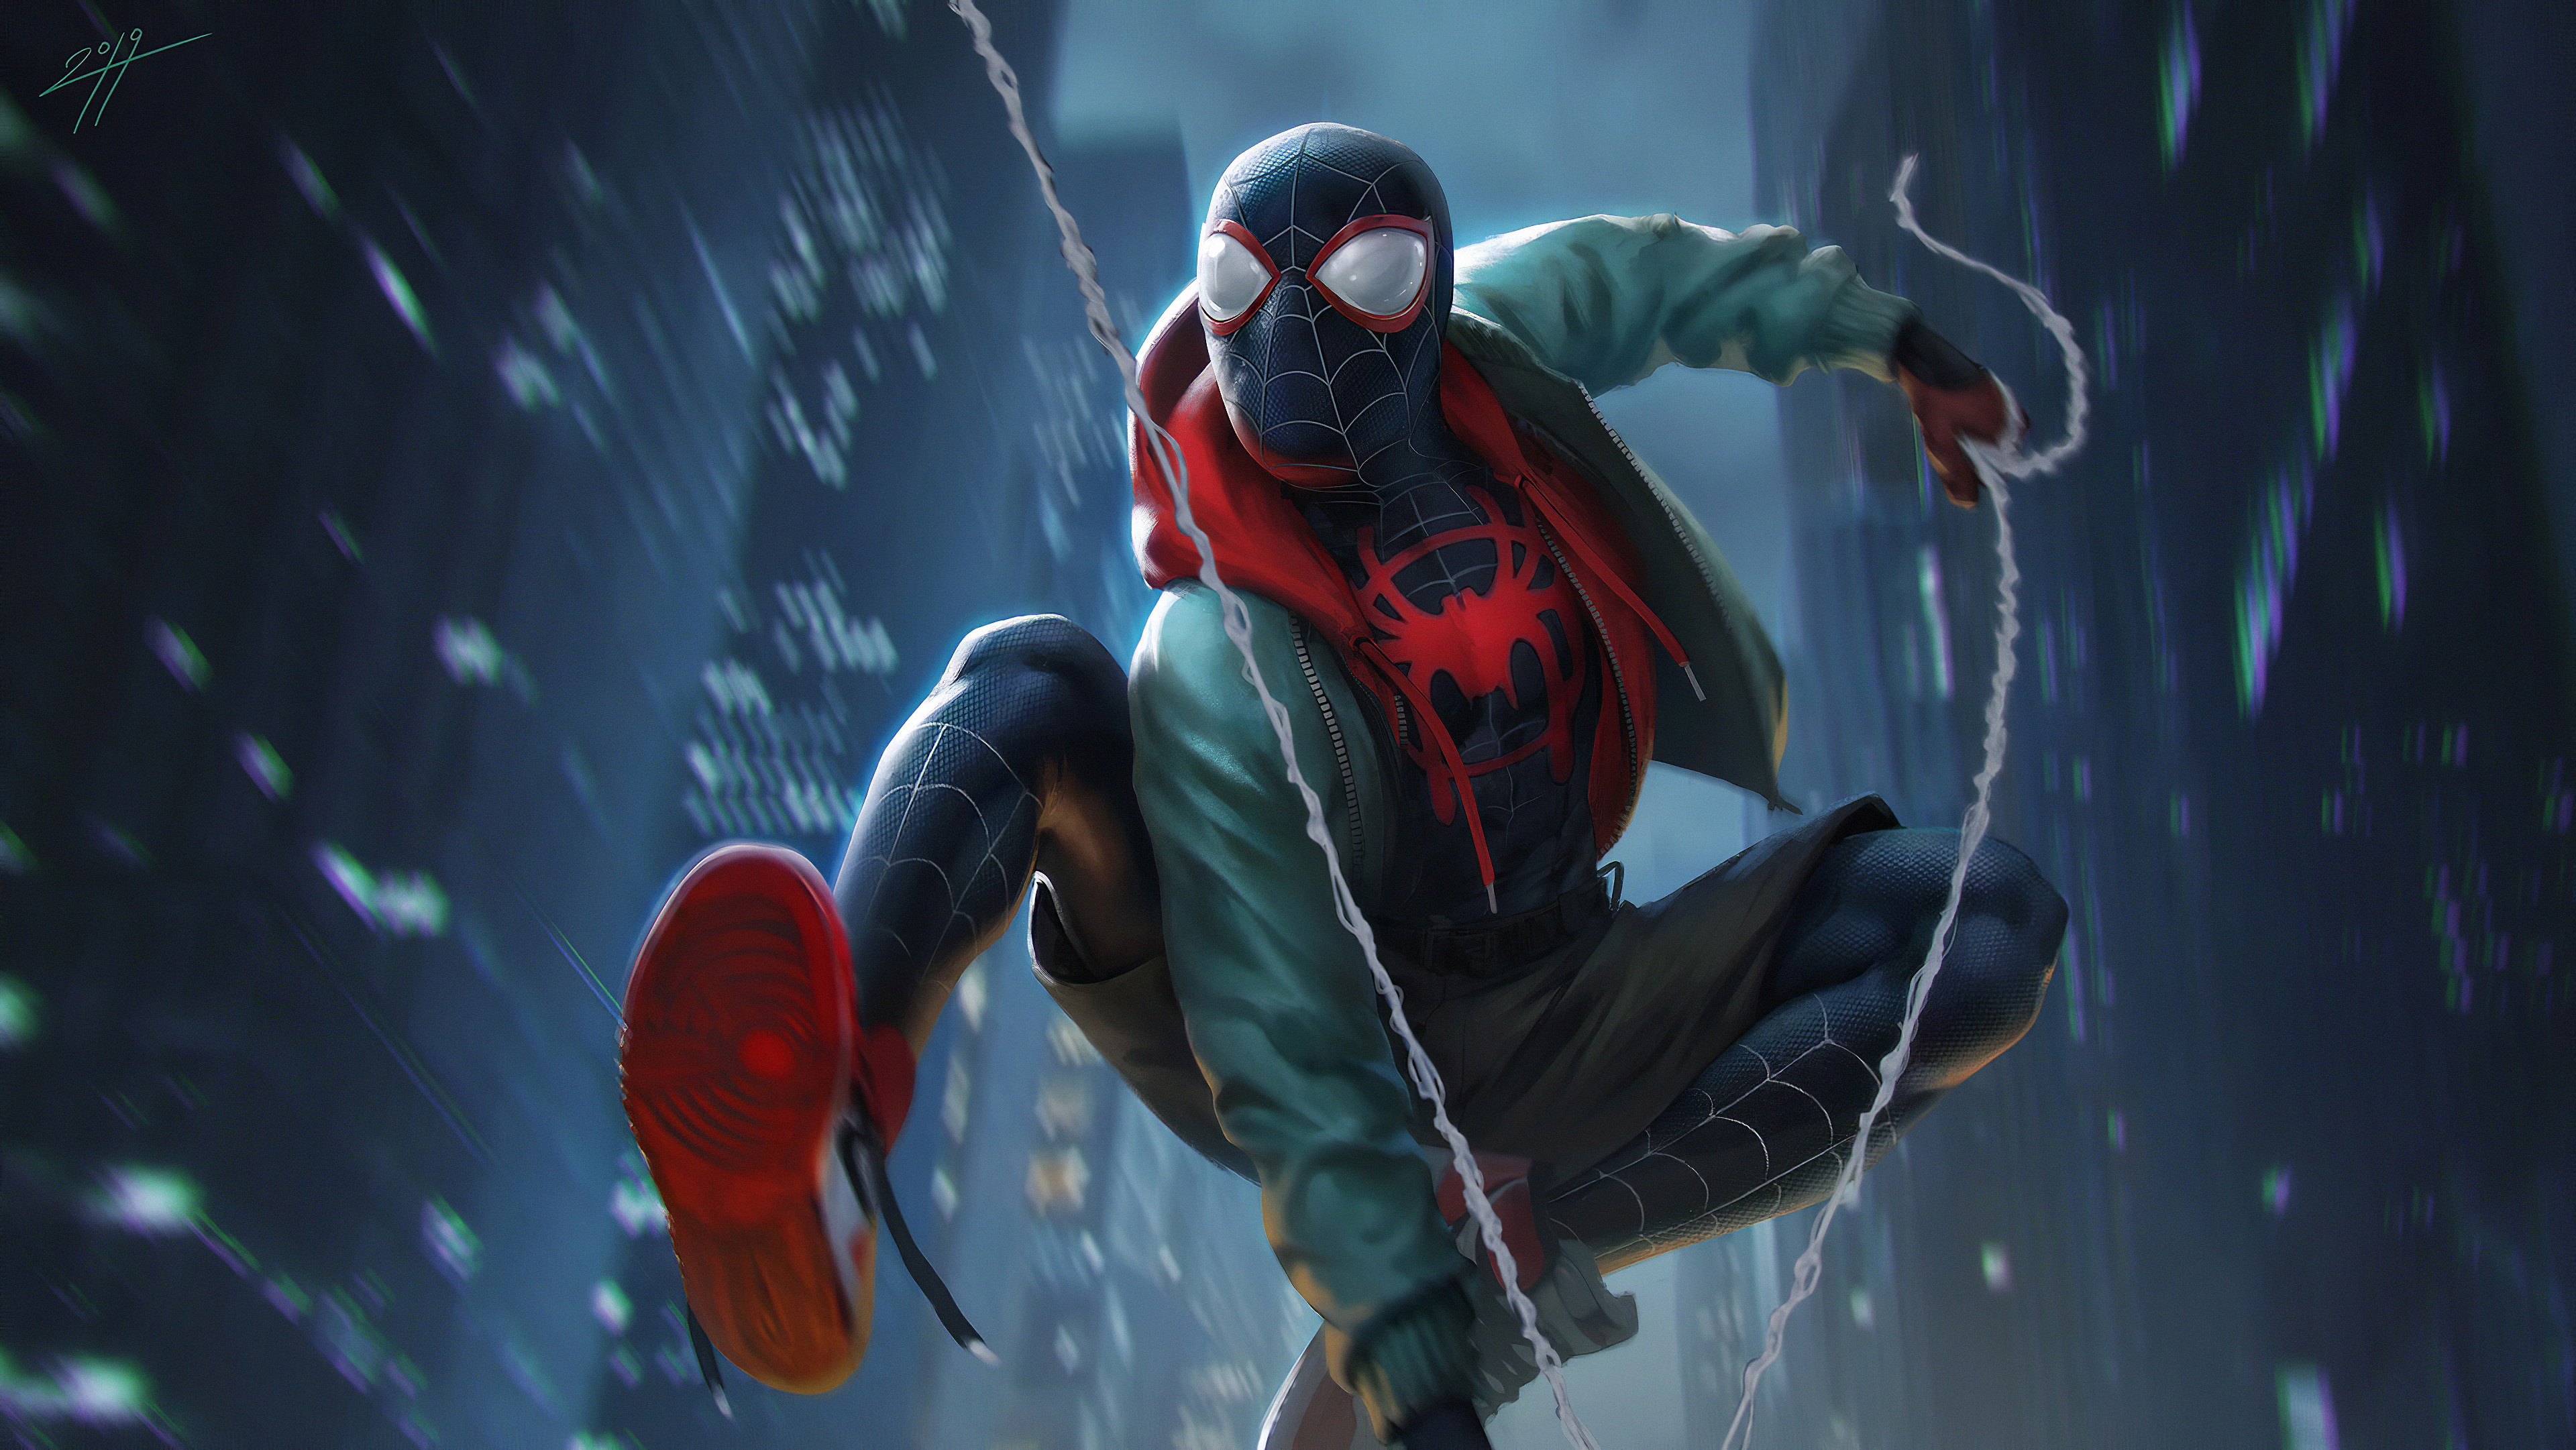 spiderman wallpaper hd,superhero,fictional character,cg artwork,illustration,action figure